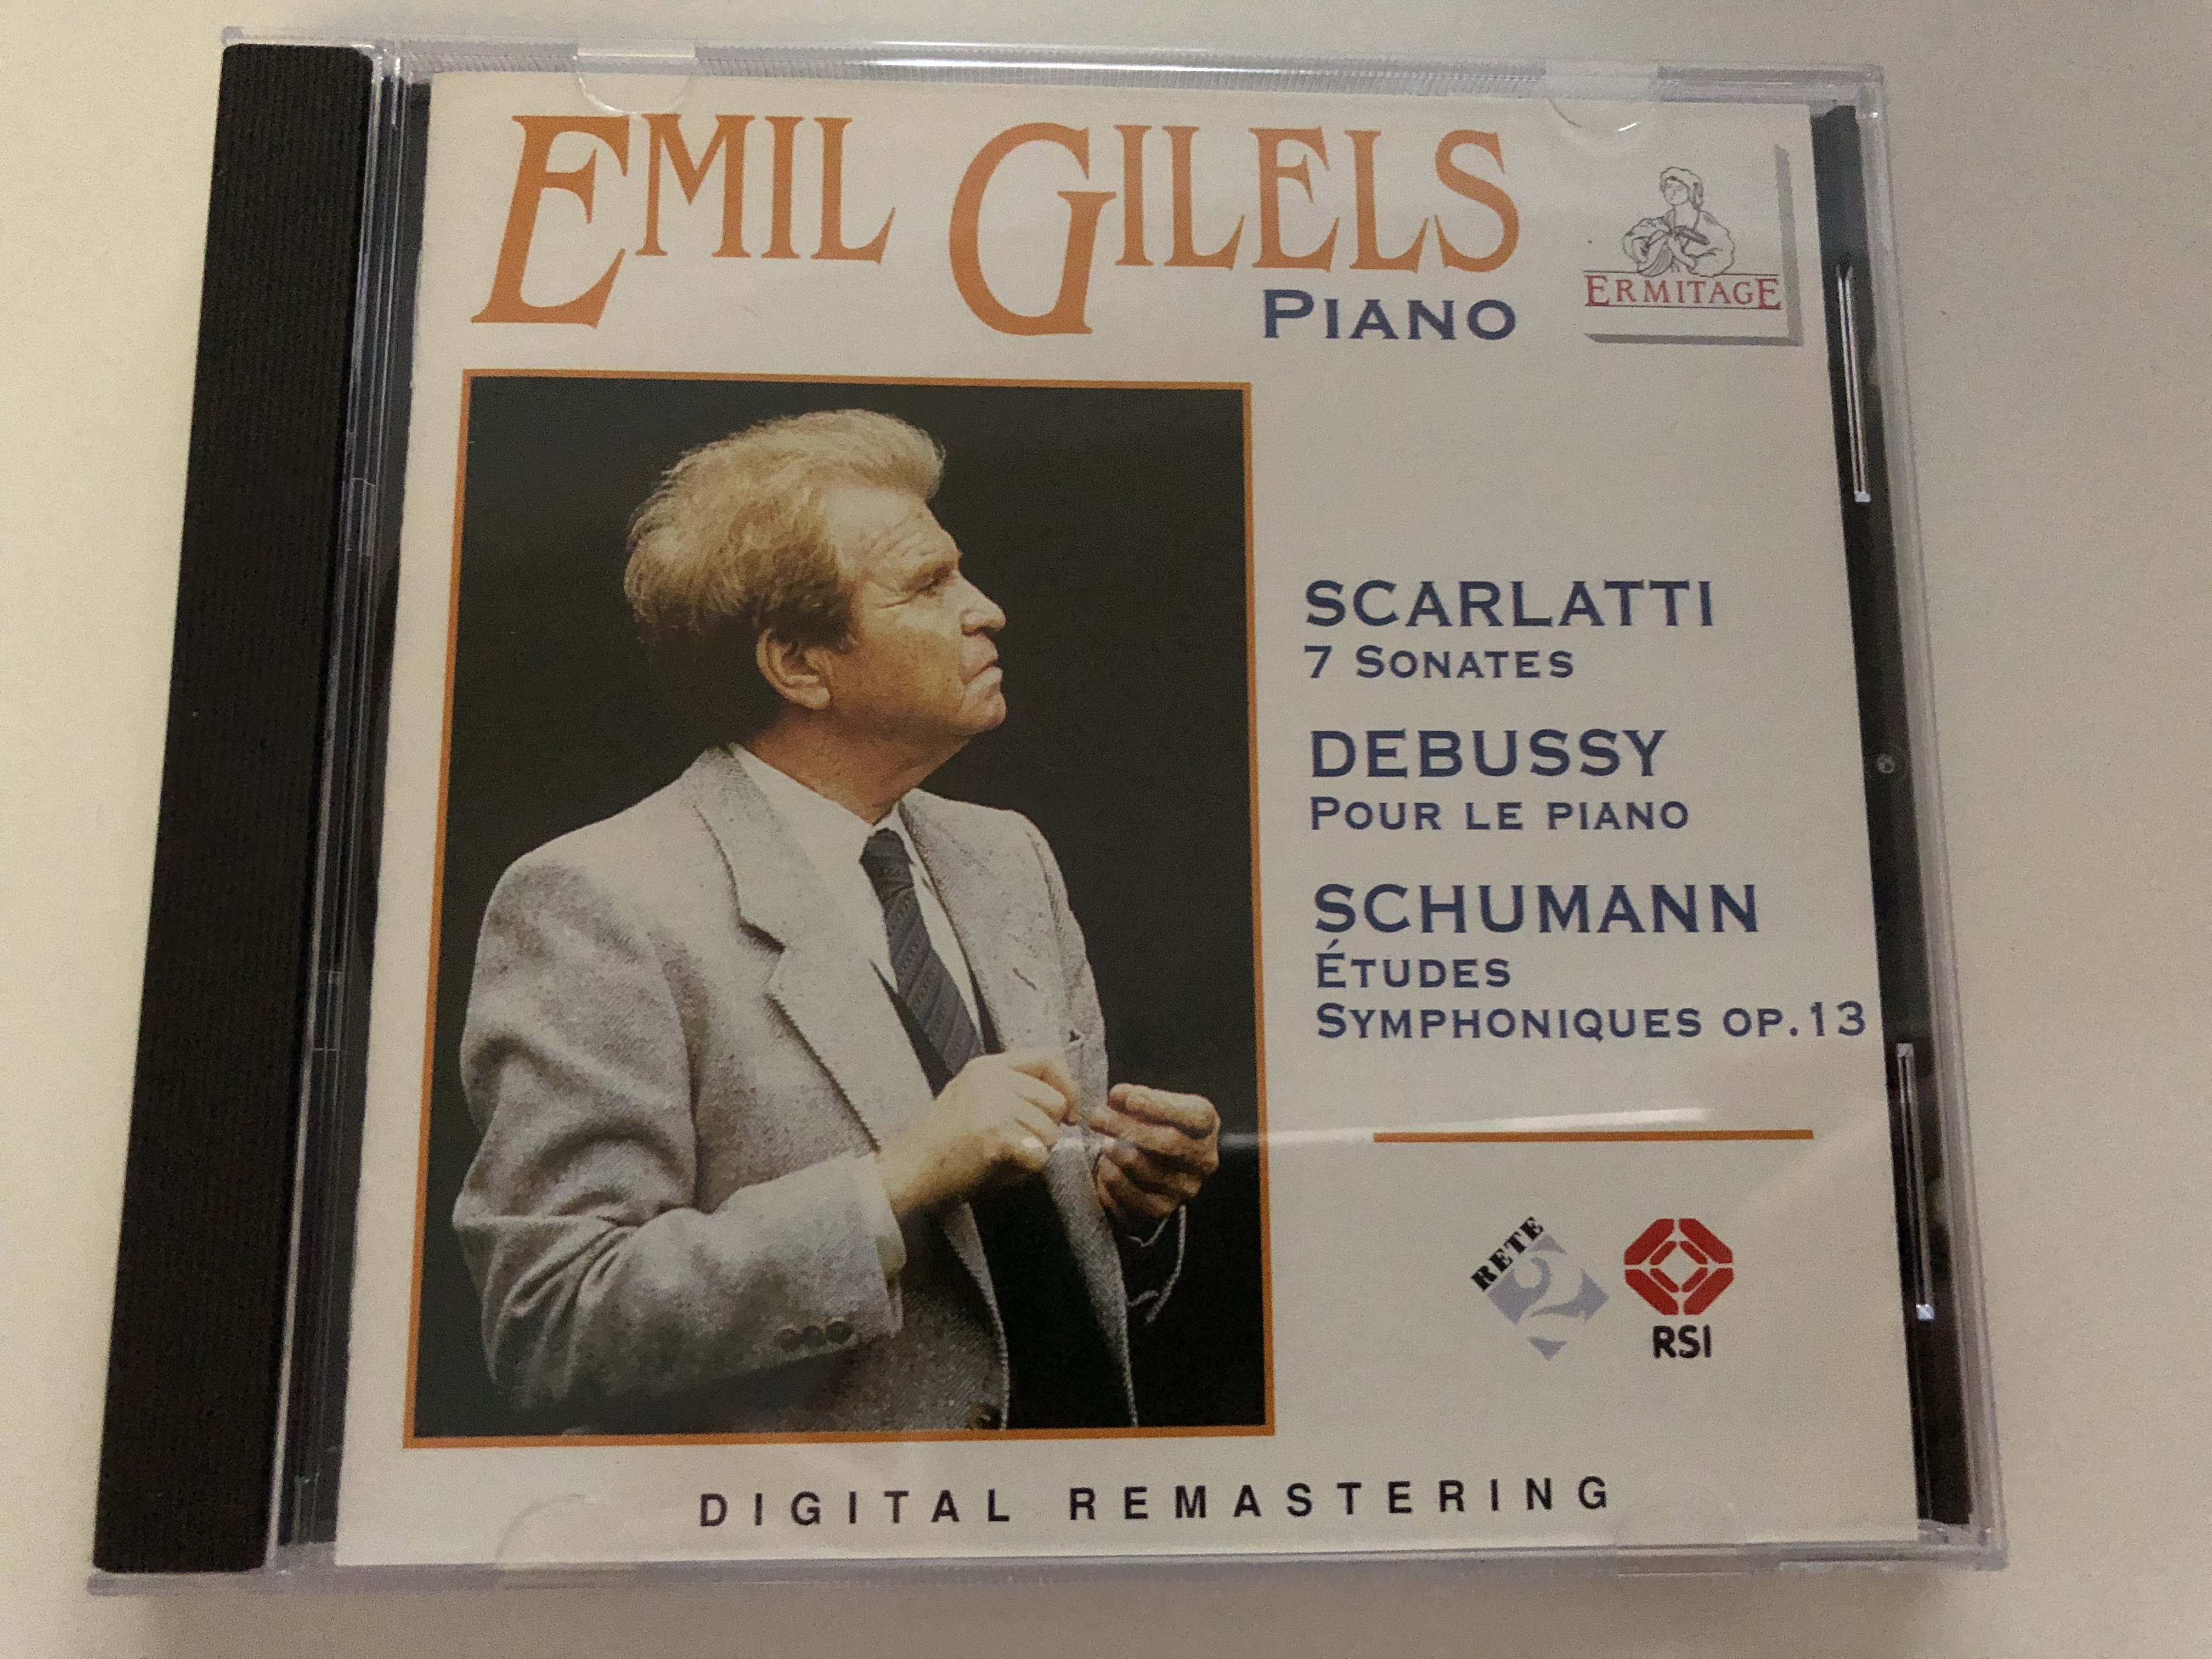 emil-gilels-piano-scarlatti-7-sonates-debussy-pour-le-piano-schumann-tudes-symphoniques-op.13-ermitage-audio-cd-1995-erm-163-2-1-.jpg